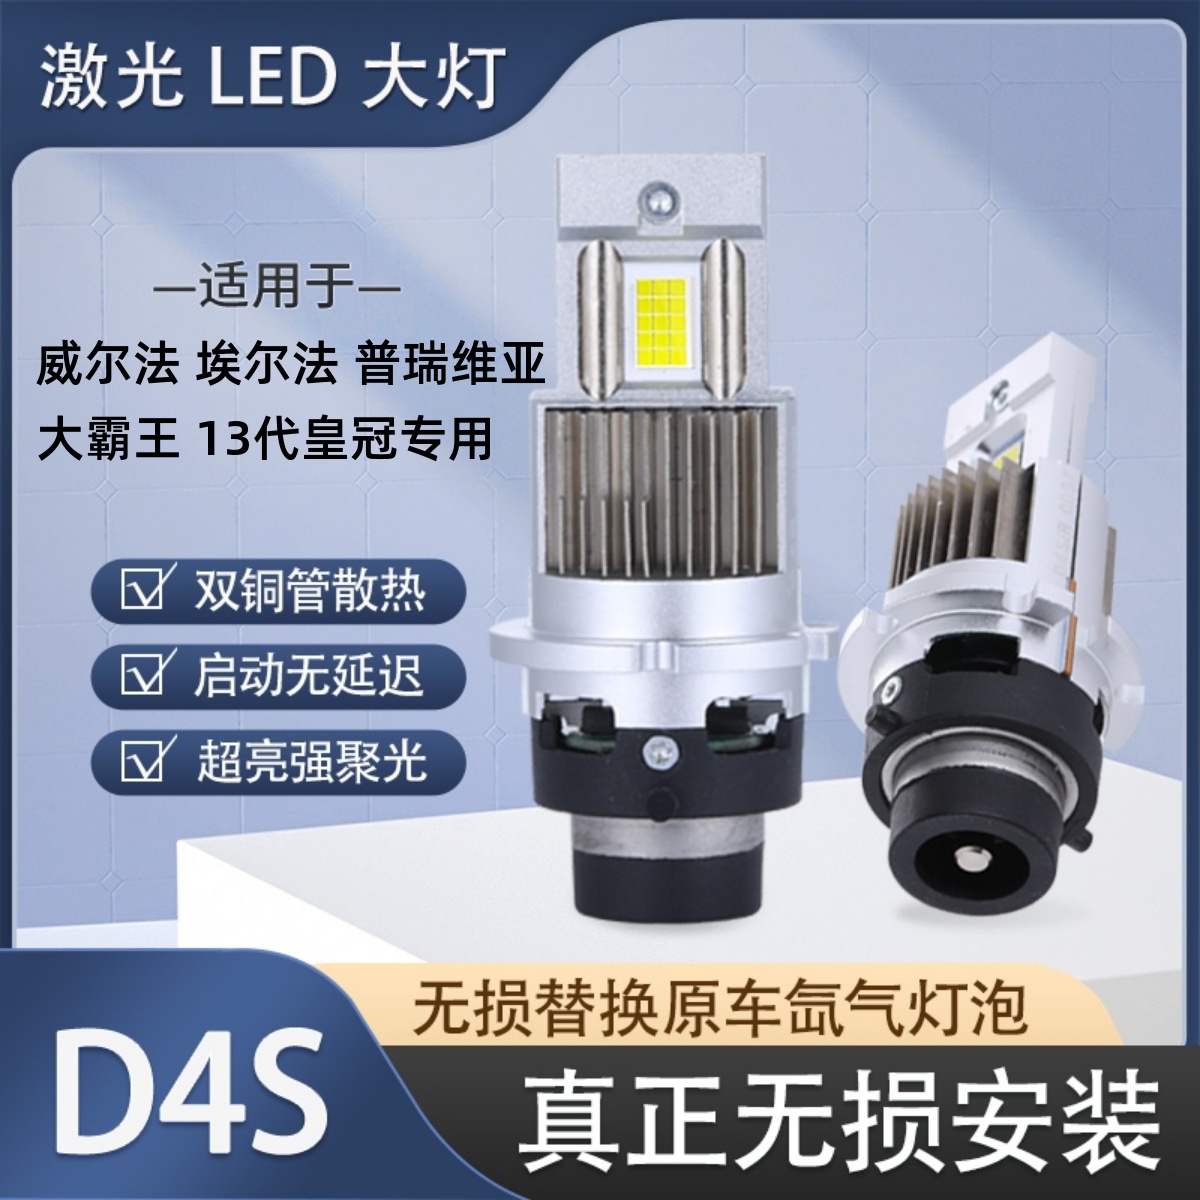 D4S氙气灯升级超亮强光LED大灯